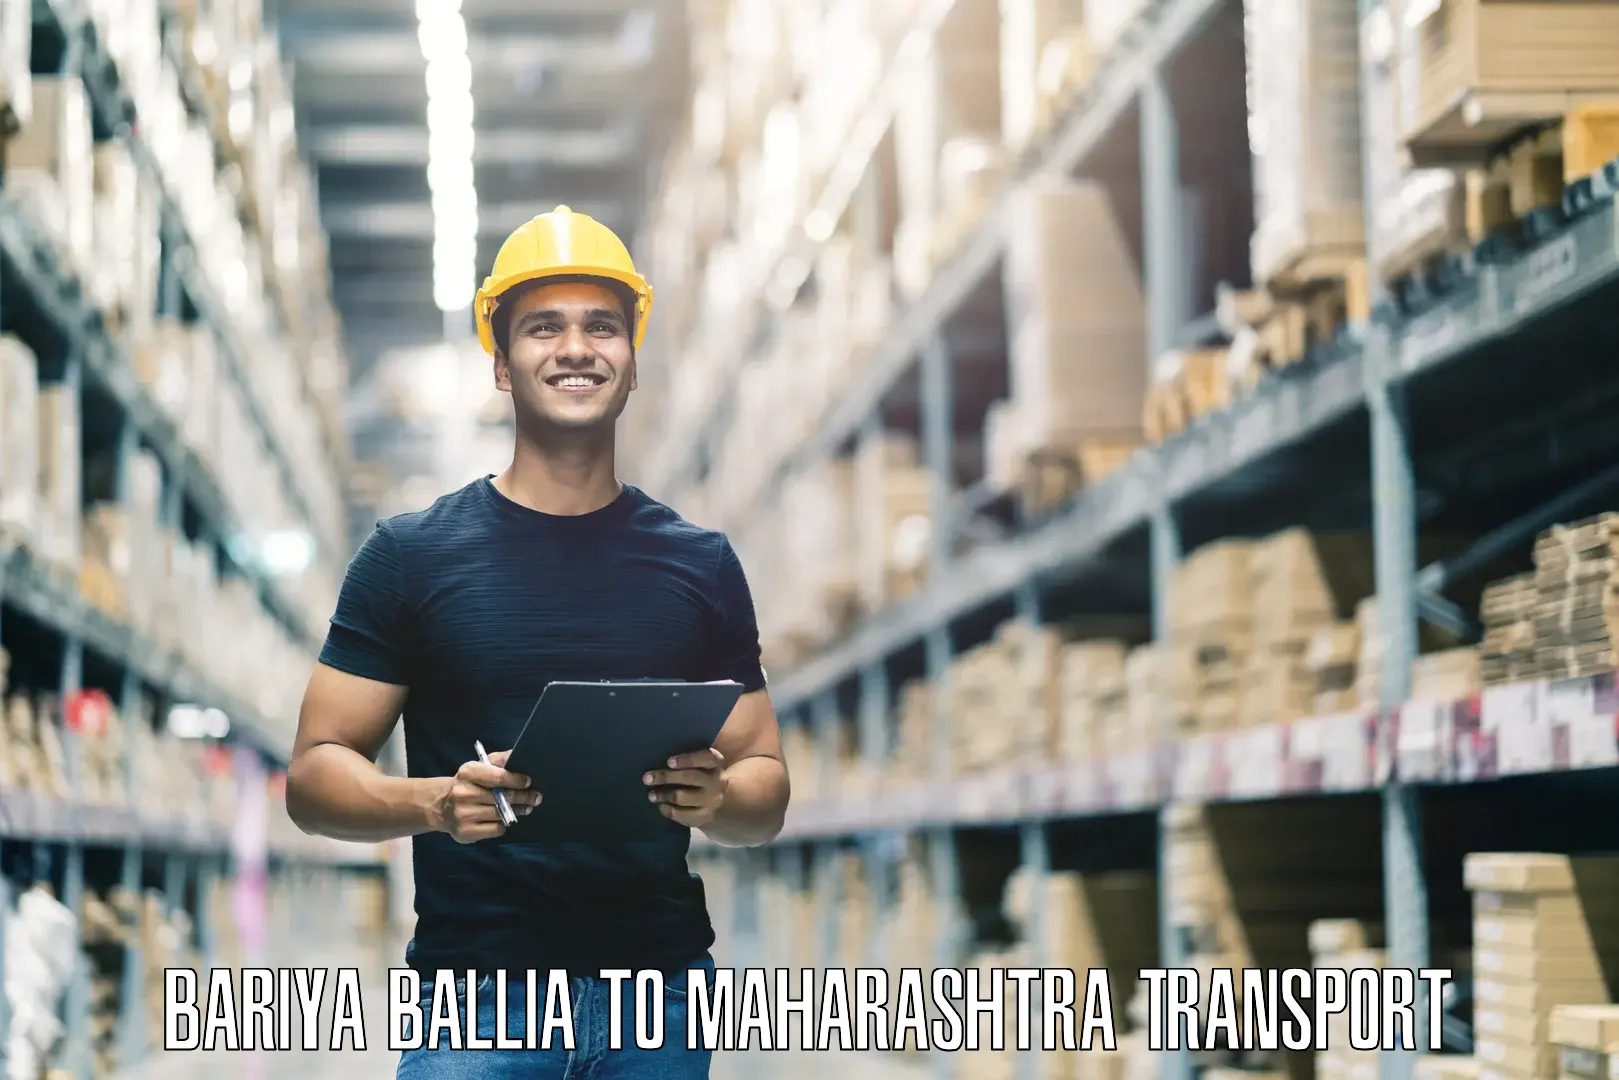 Furniture transport service Bariya Ballia to Aheri